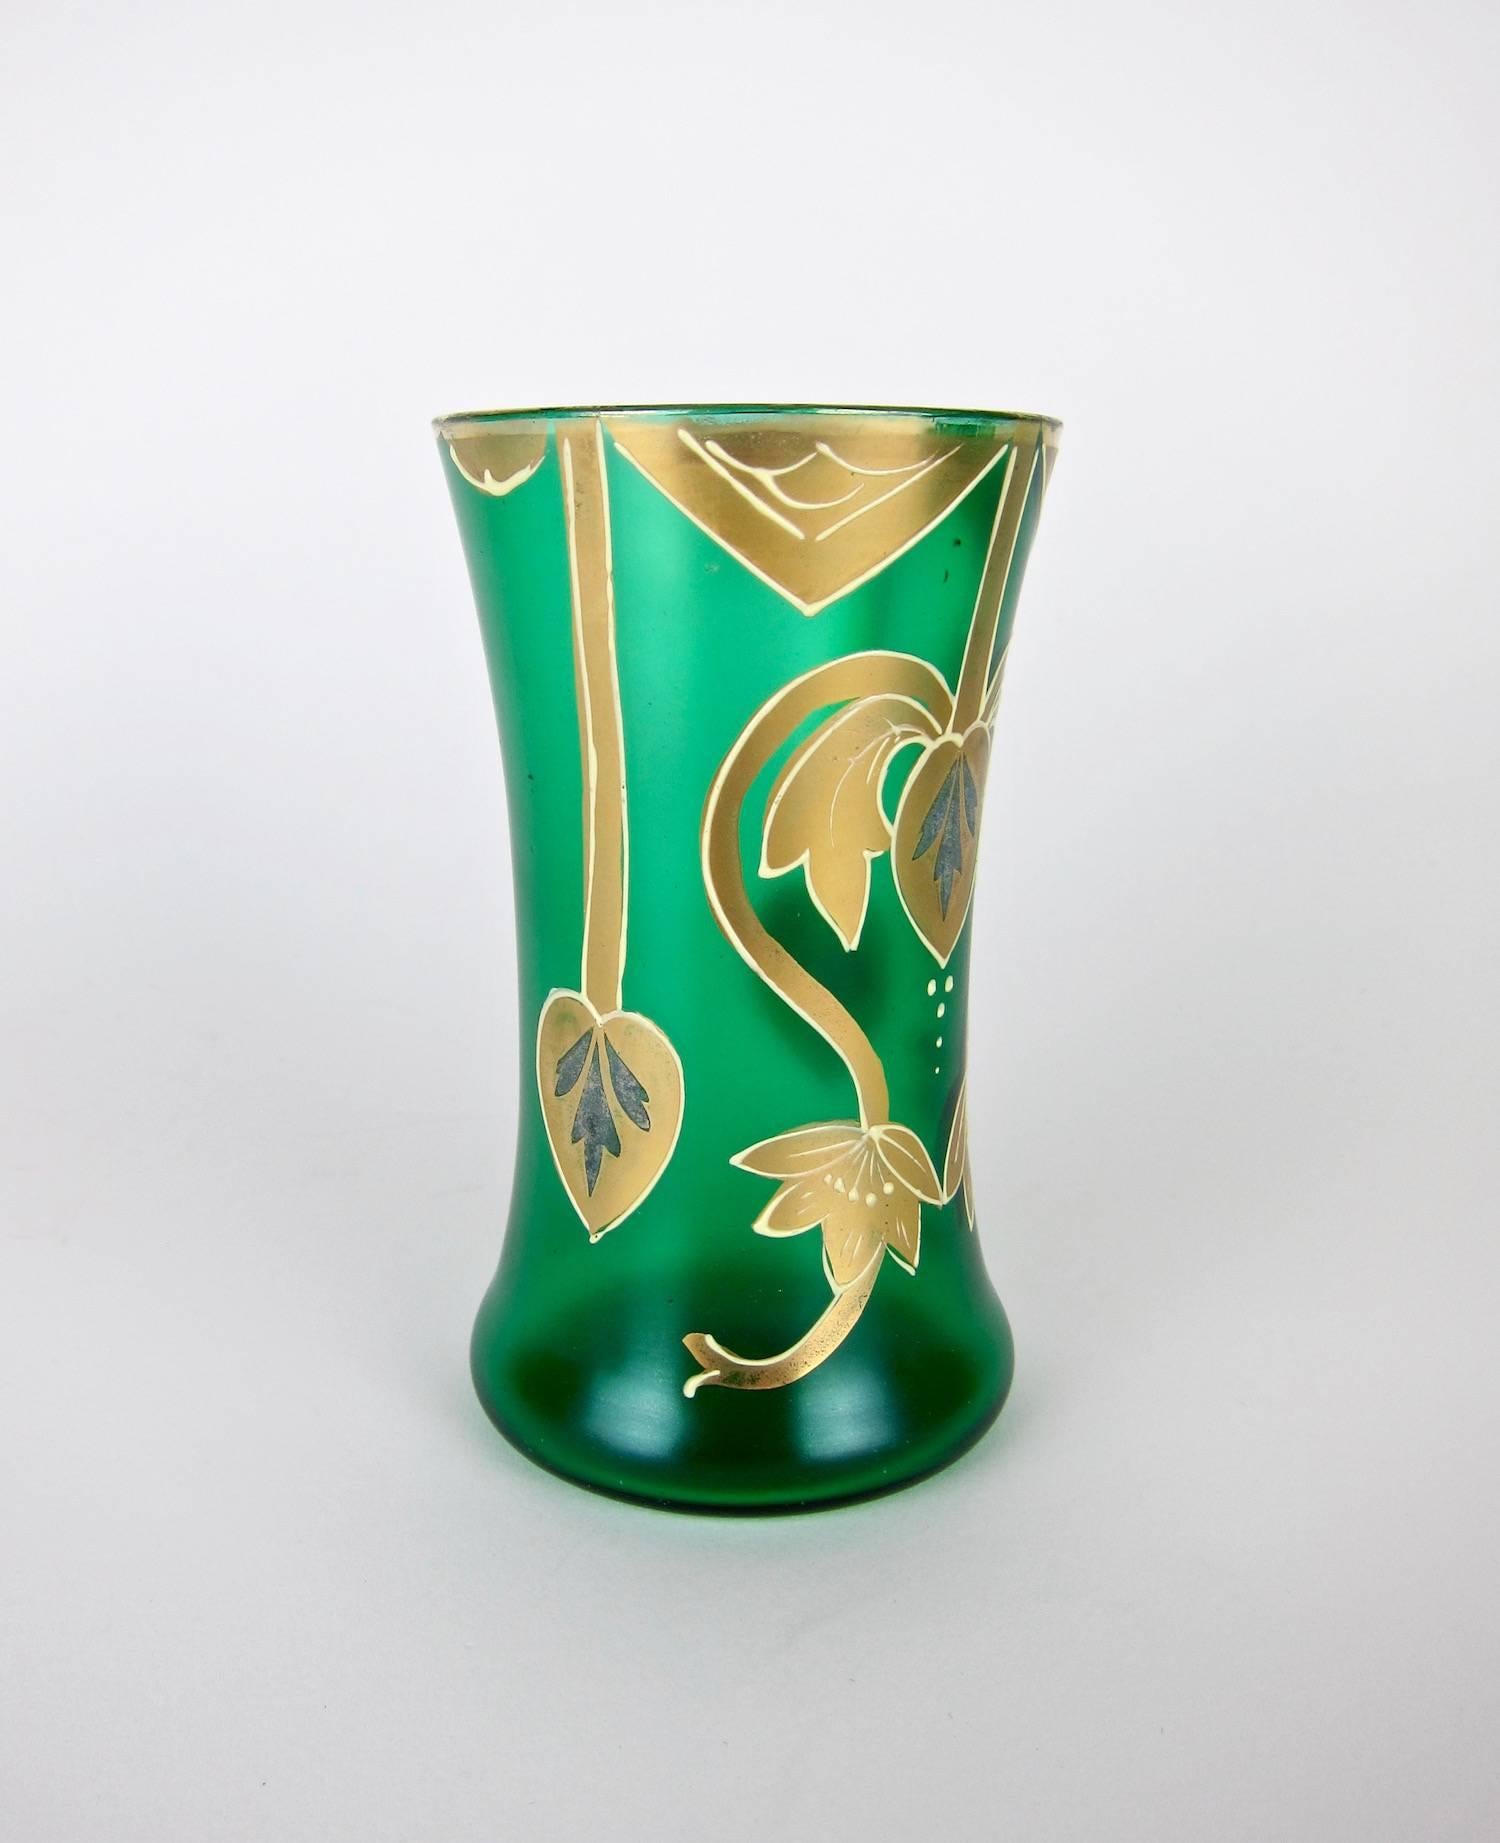 Enameled Antique Green Drinking Glasses with Golden Art Nouveau Enamel Decor